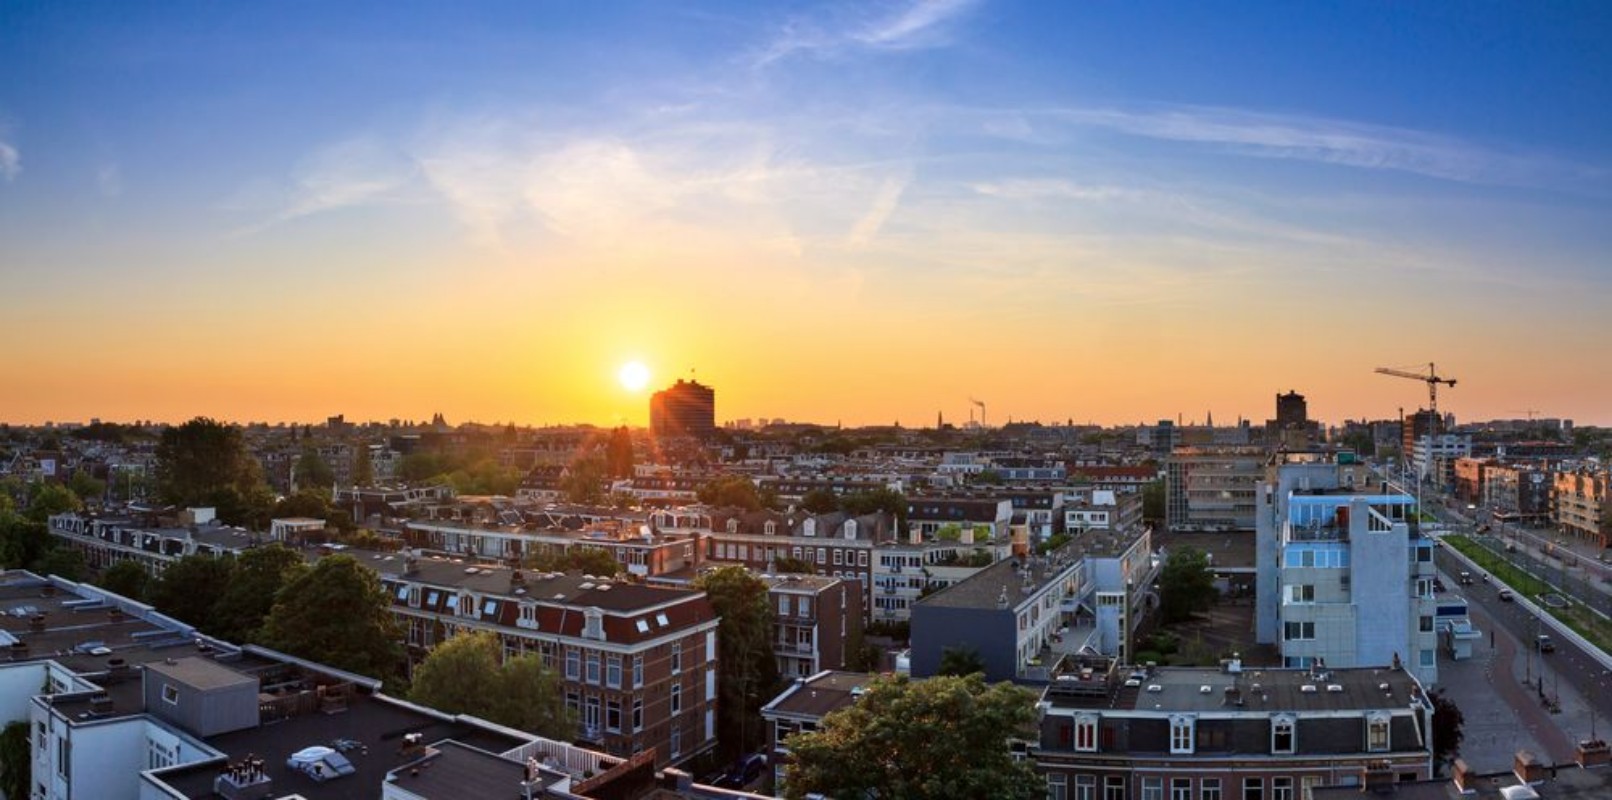 Image de Amsterdam cityscape sunset skyline